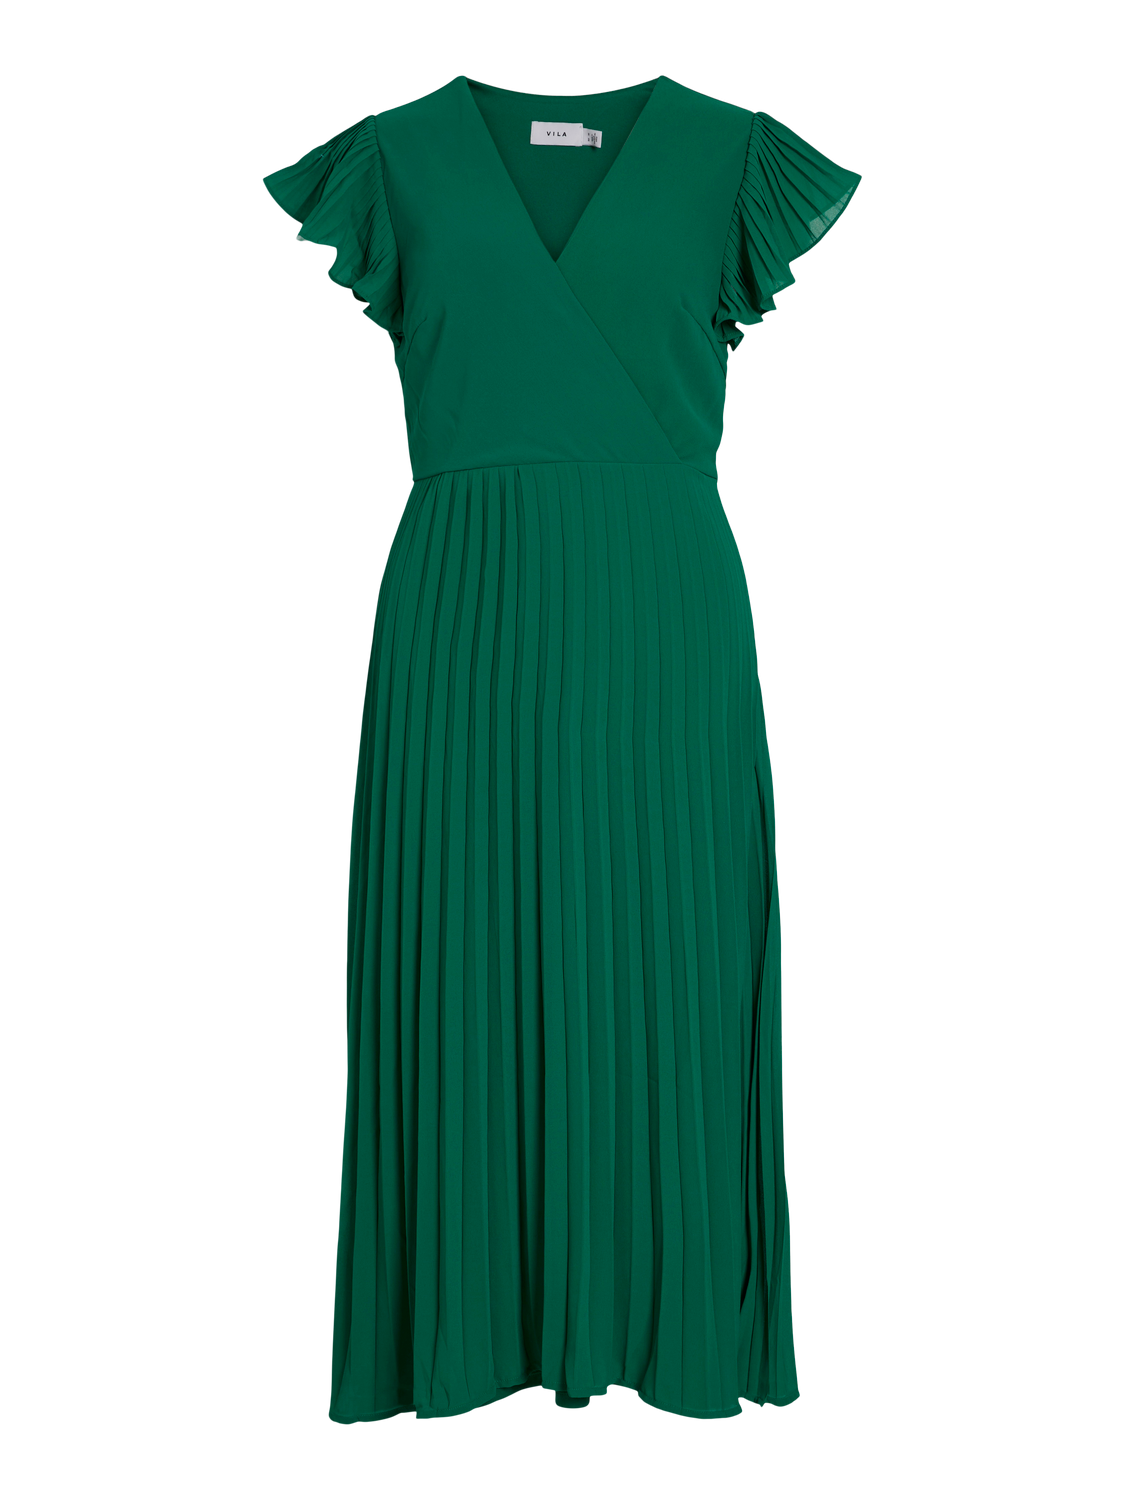 VISOPHIA Dress - Ultramarine Green